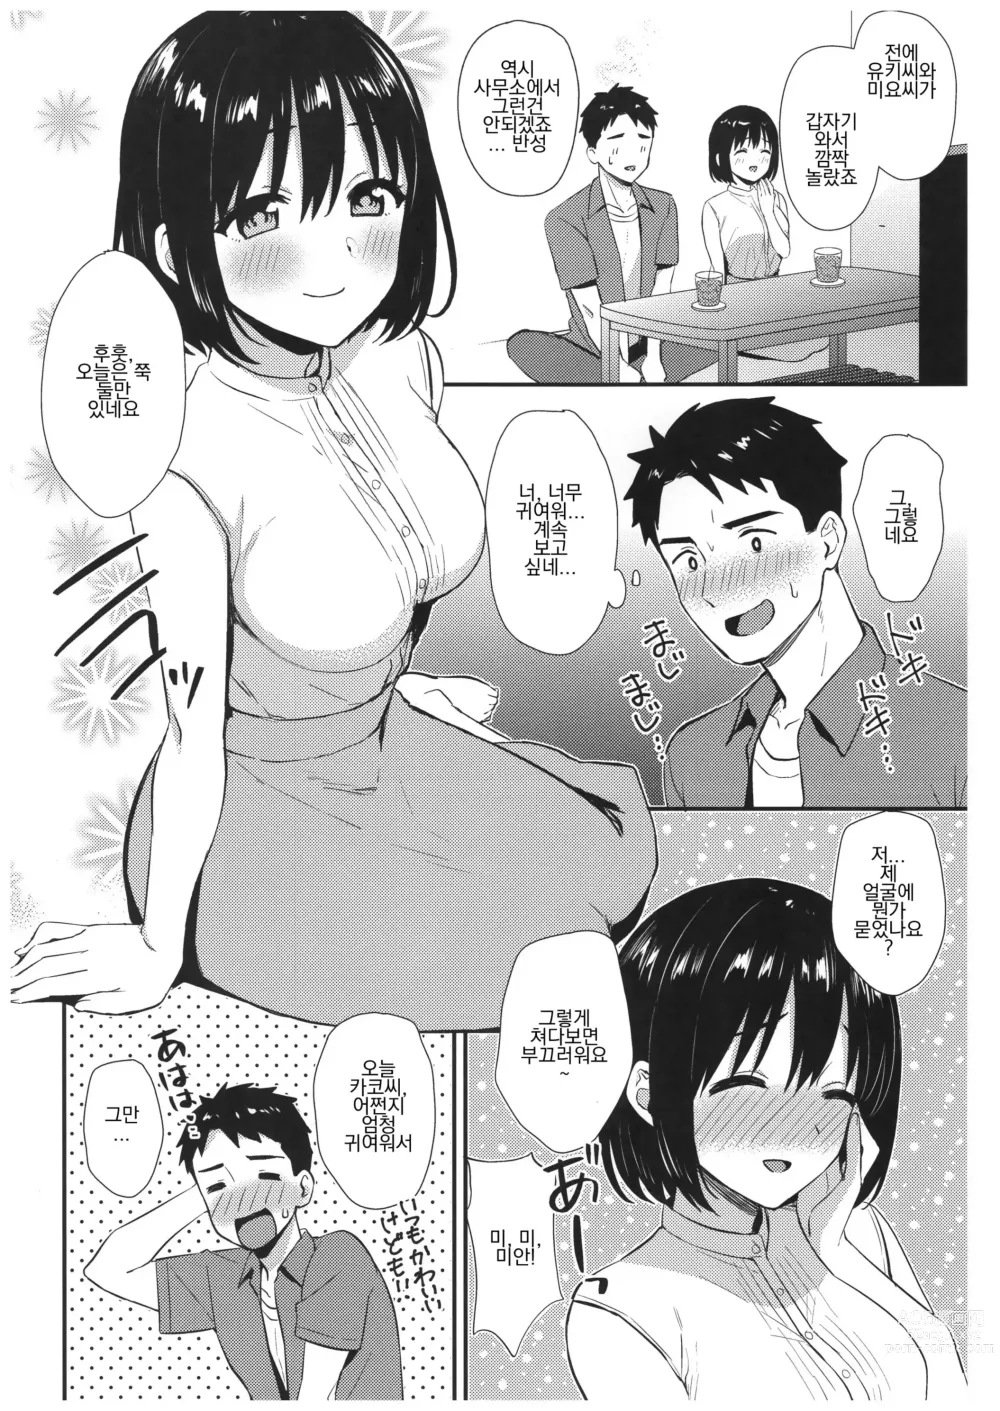 Page 5 of doujinshi 카코 씨와 첫 경험.